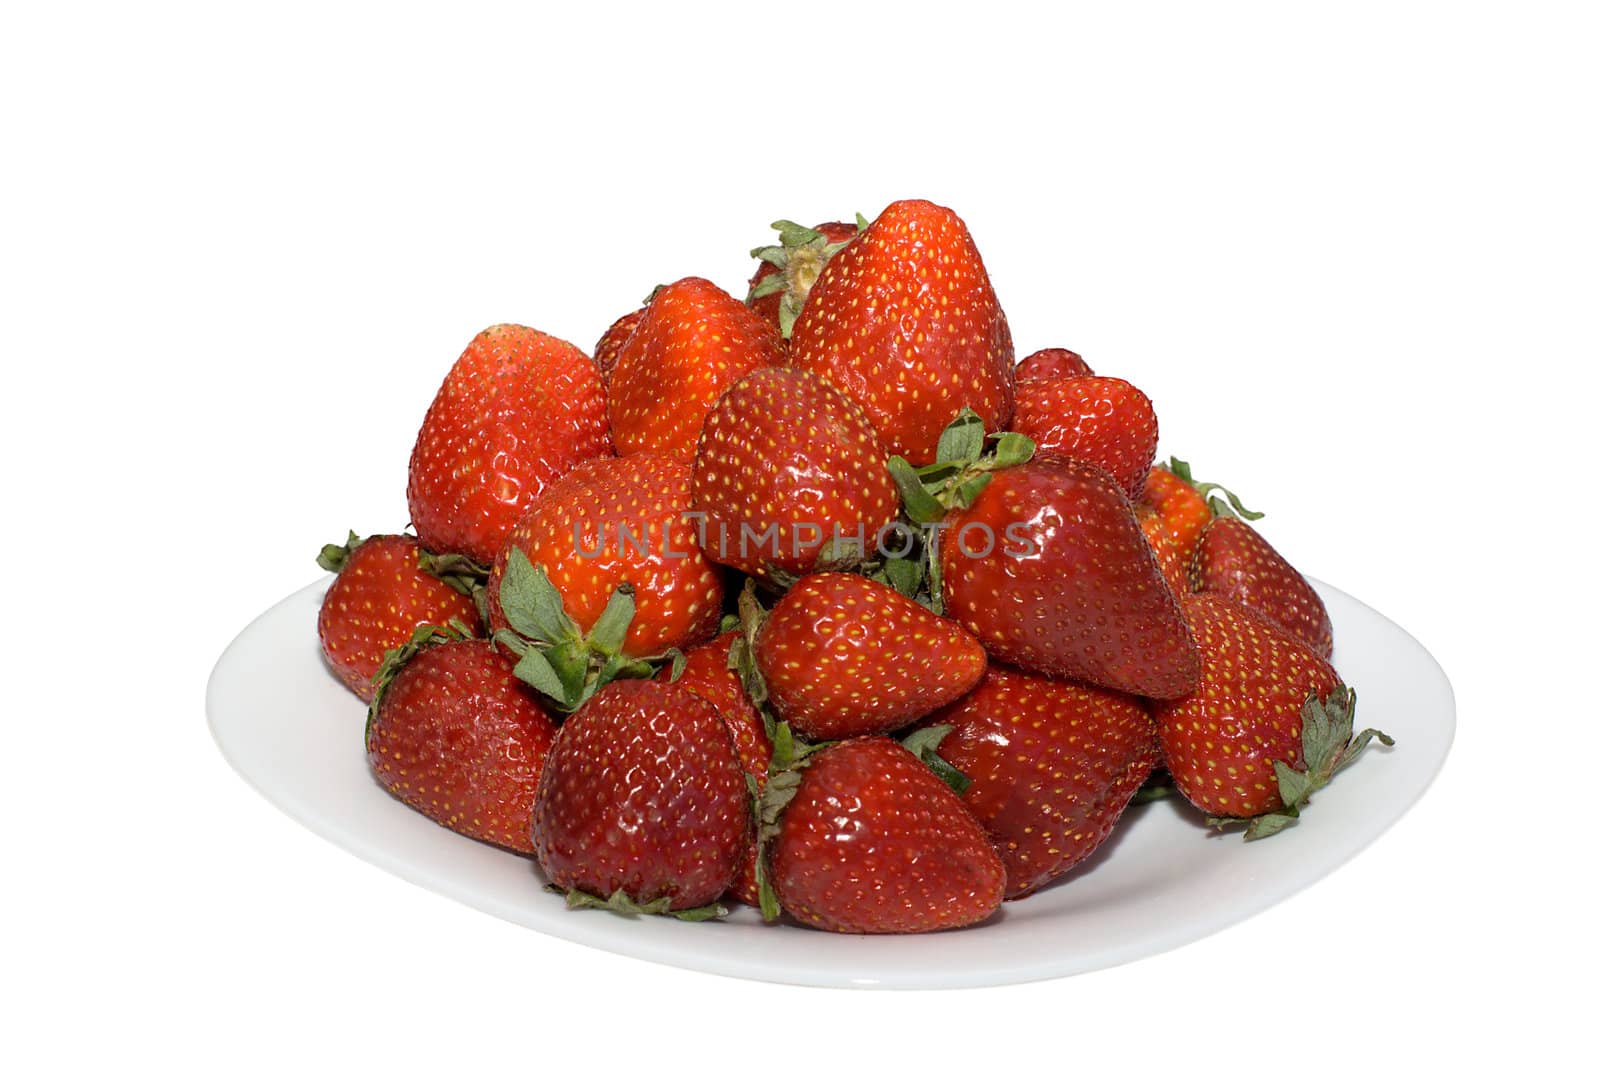 Strawberry on a plate by BIG_TAU